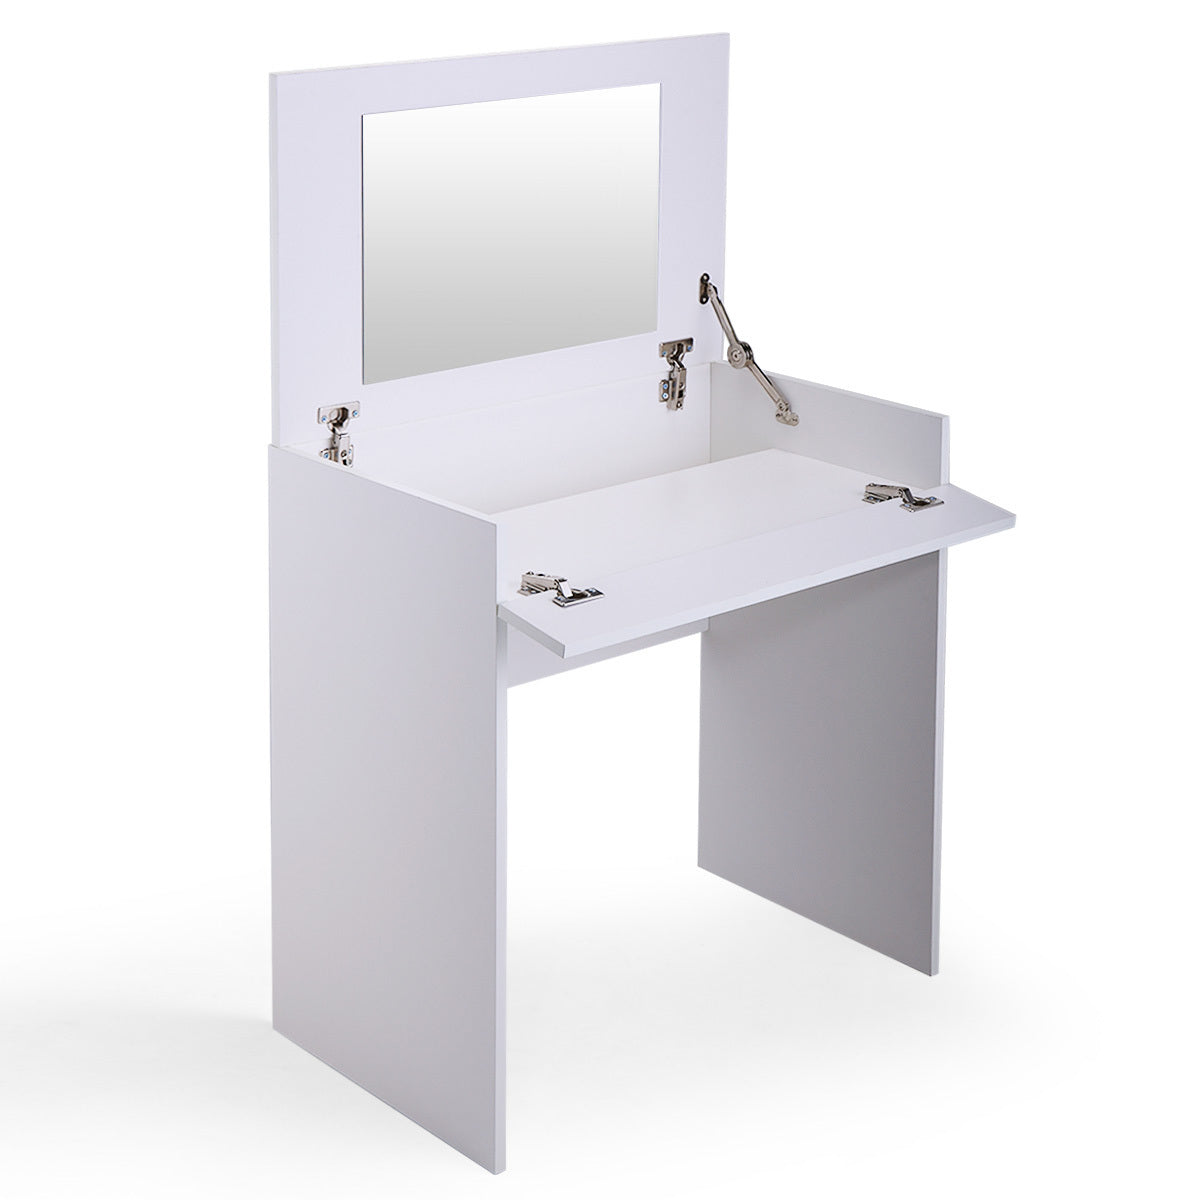 White Vanity Sets, Makeup Vanity Table with Flip up Mirror Bedroom Dresser Table Jewelry Storage